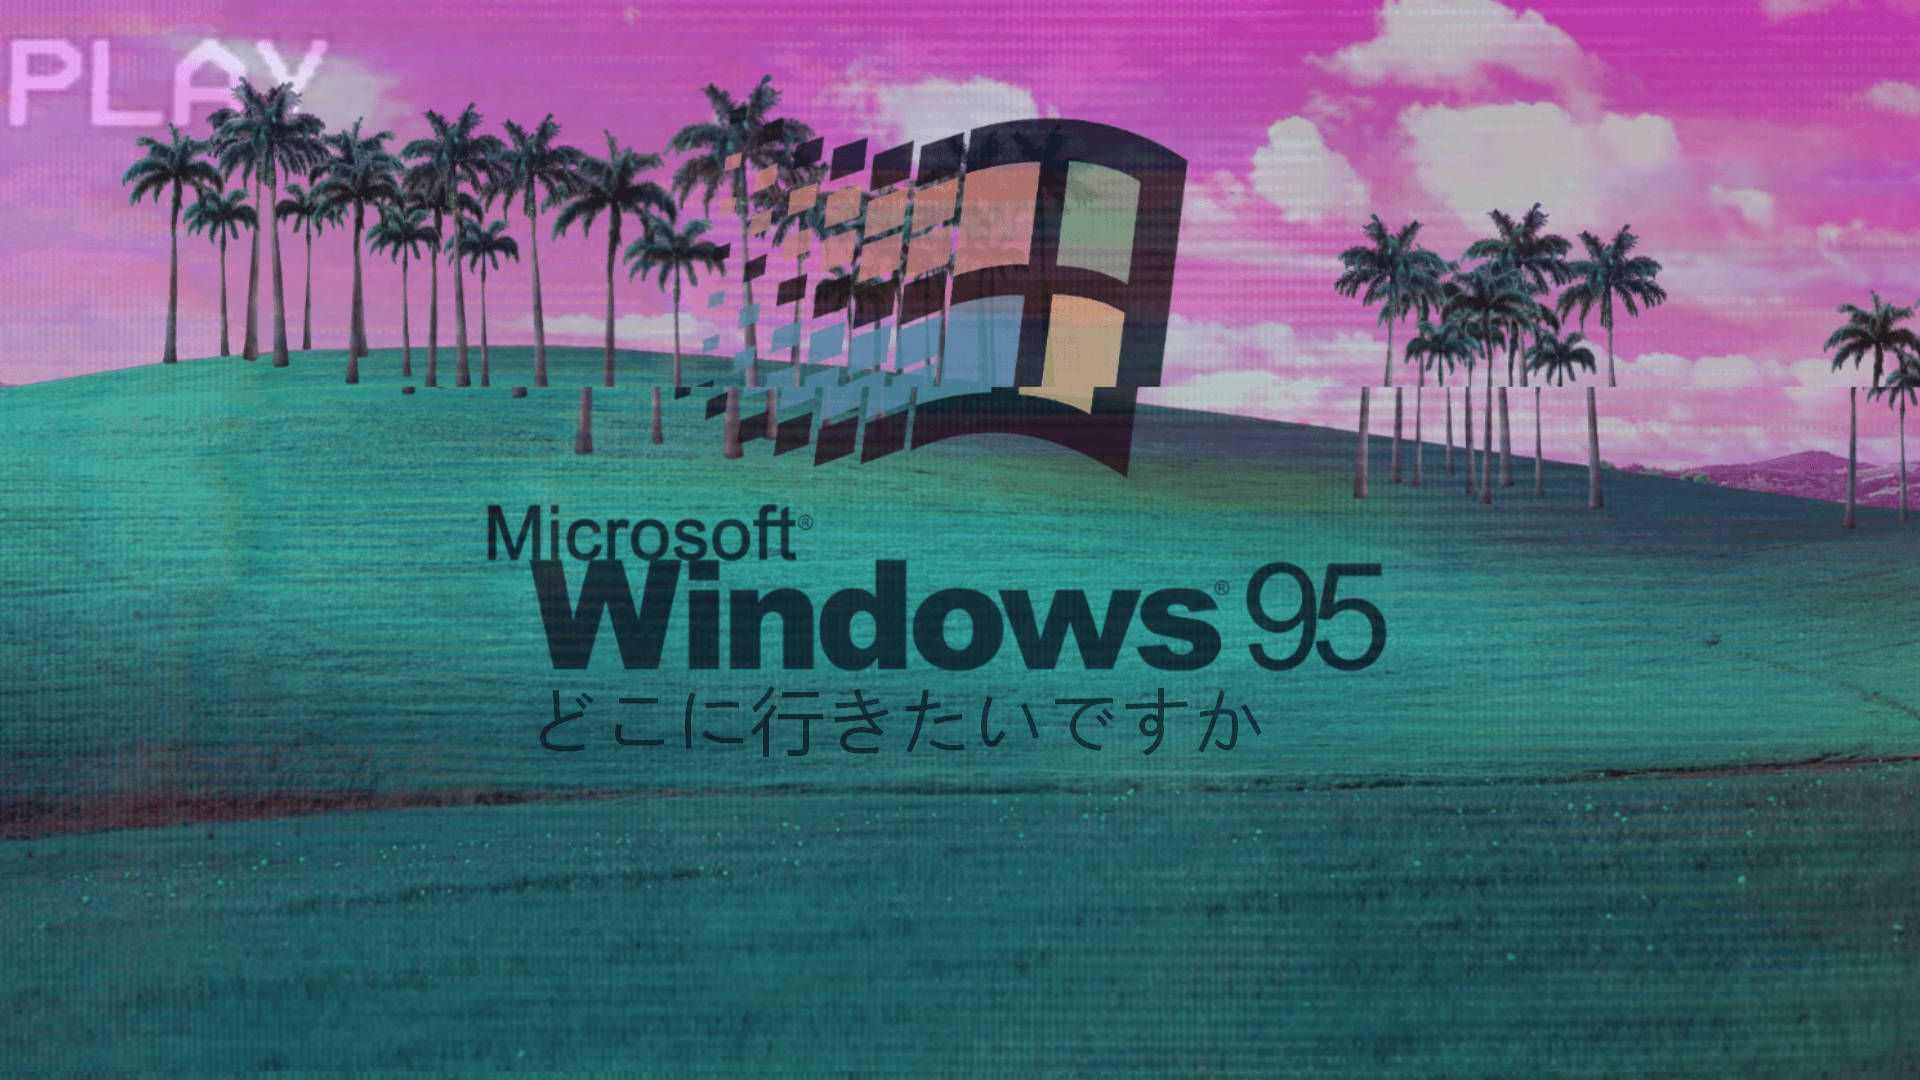 Aesthetic Teal Windows 95 Retrowave Design Background